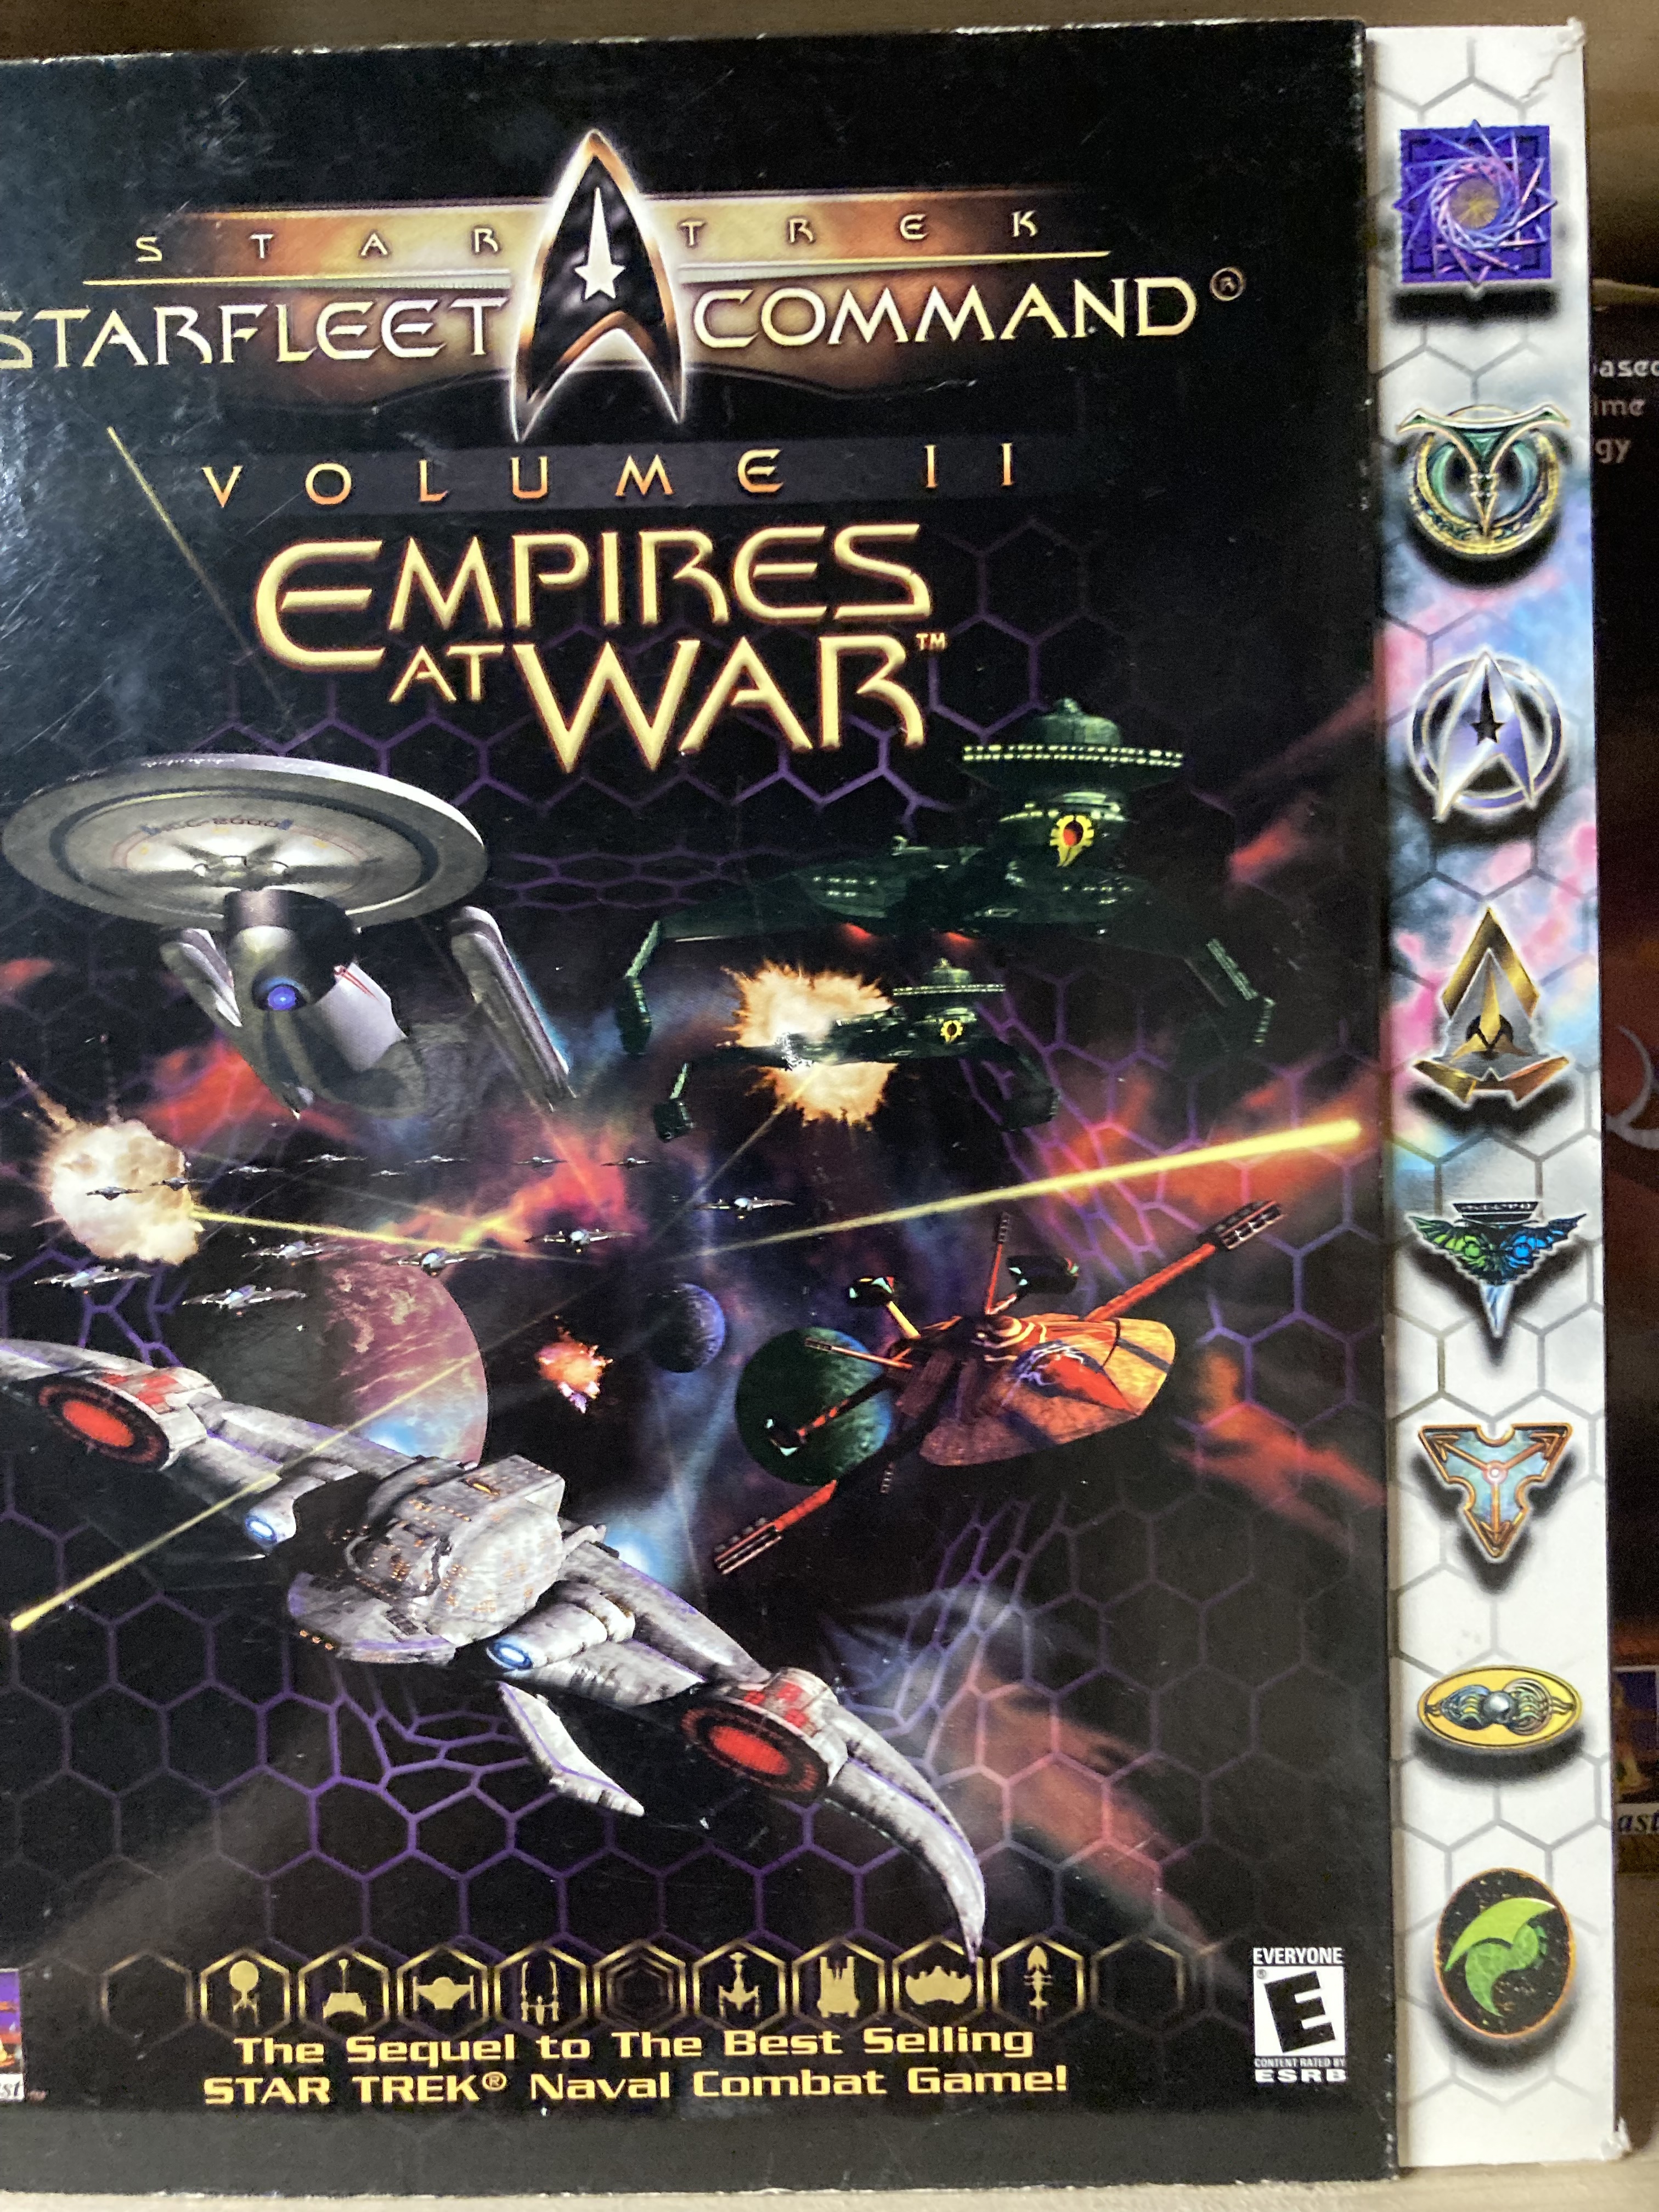 TGDB - Browse - Game - Star Trek Starfleet Command Vol II Empires